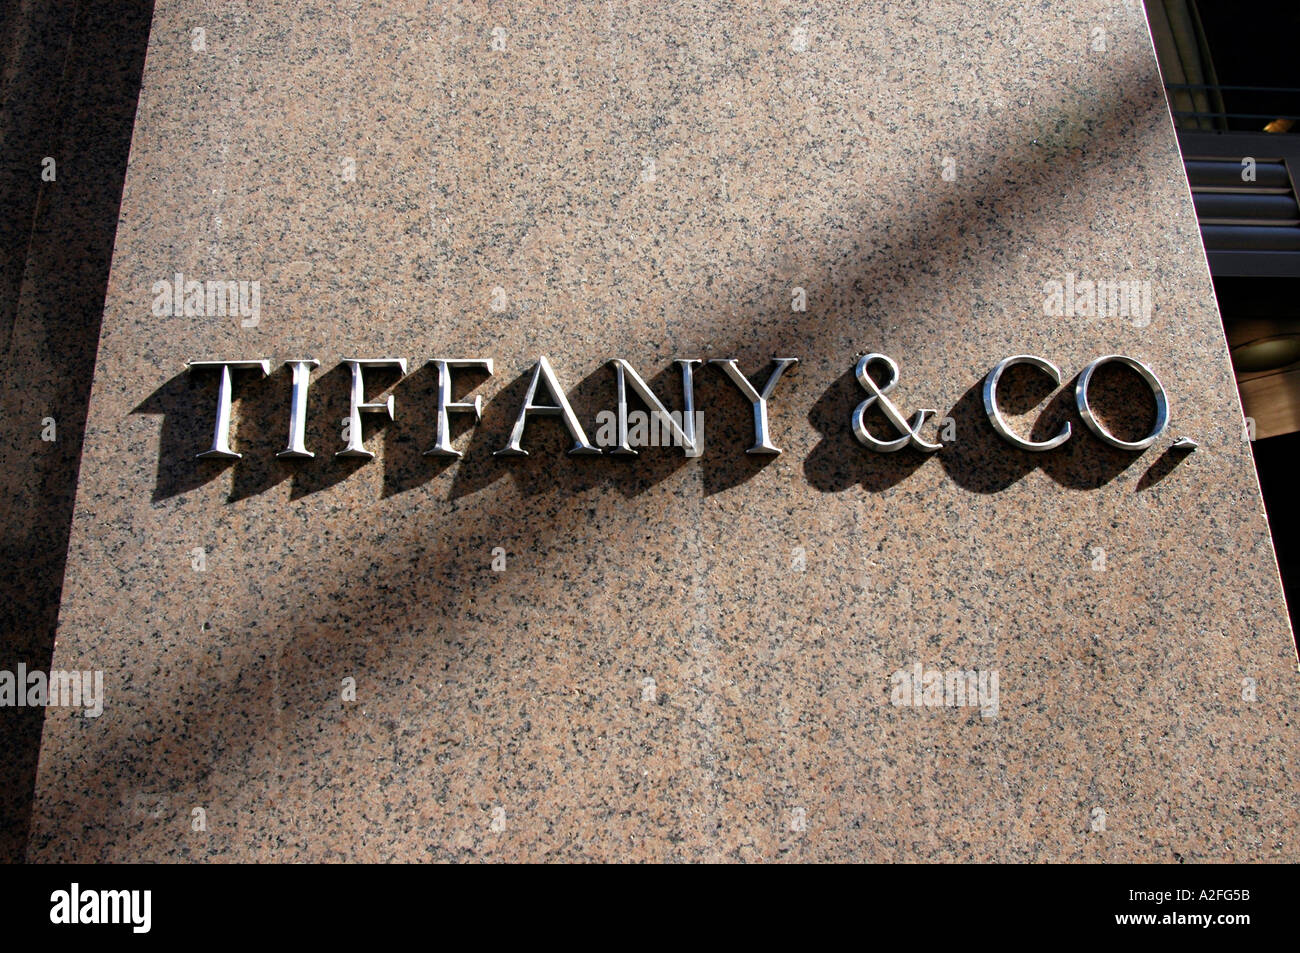 Tiffany Co jewelers on Fifth Avenue  Stock Photo